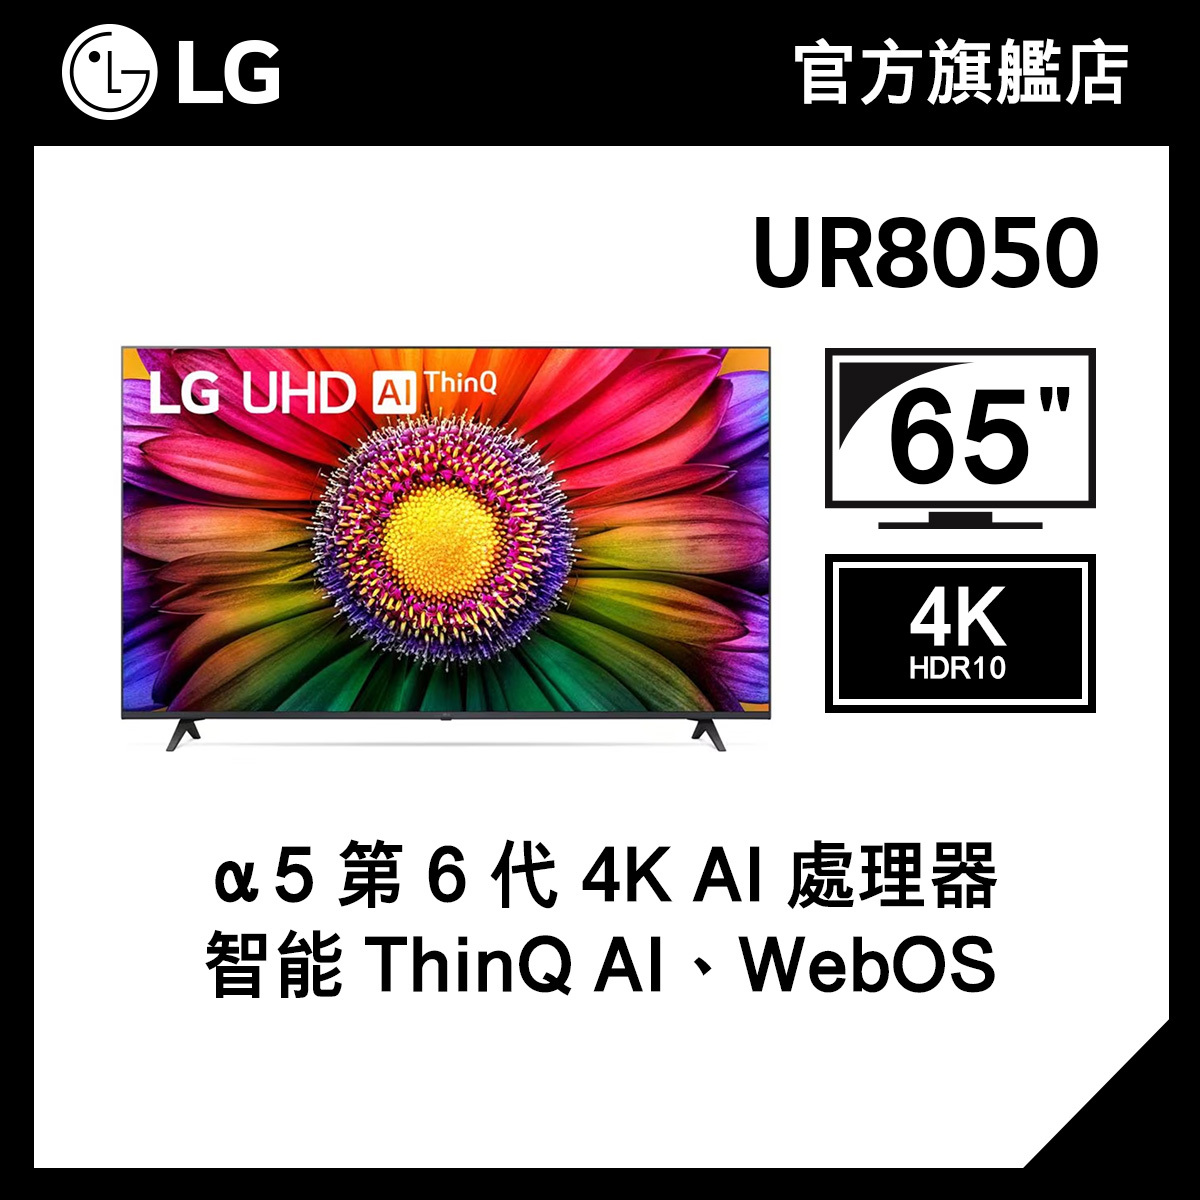 LG 65" UHD 4K 智能電視 UR8050